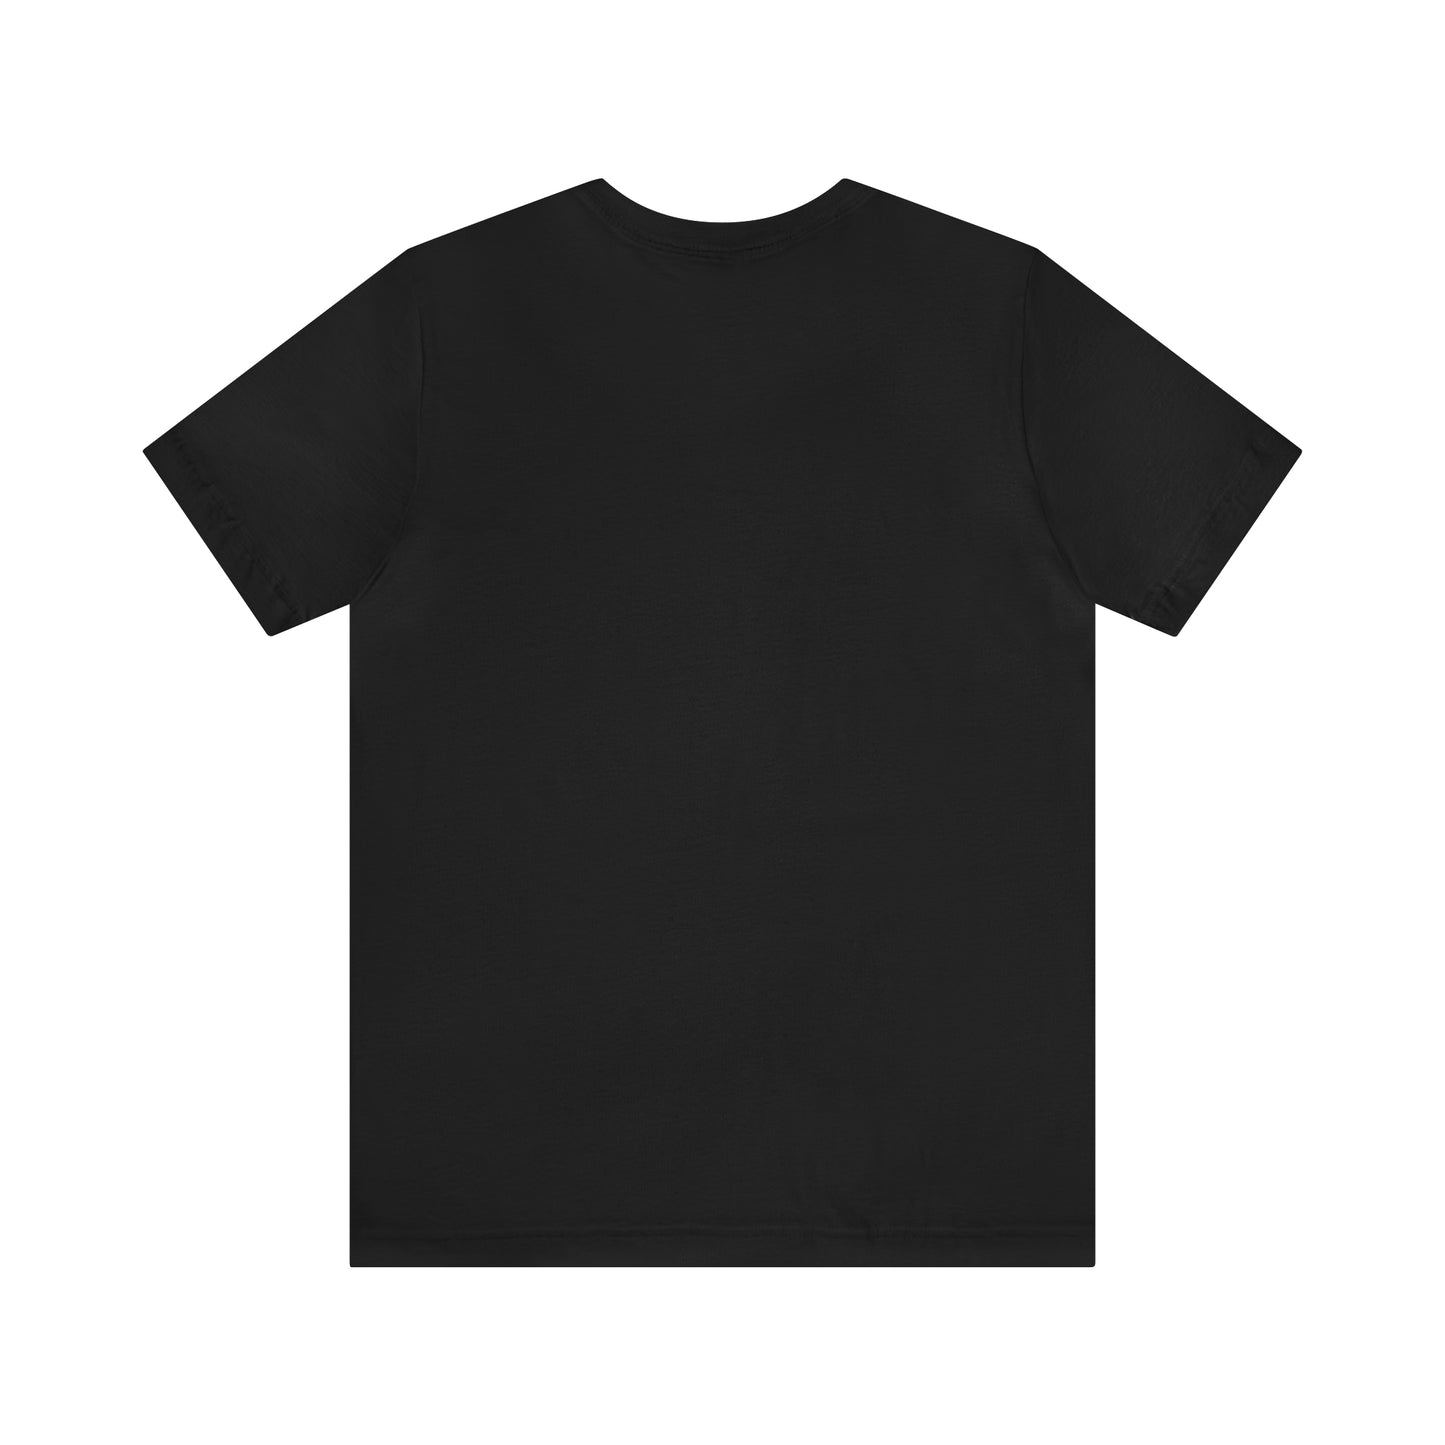 Fisher T-Shirt | Fishing Hobby Tee T-Shirt Petrova Designs